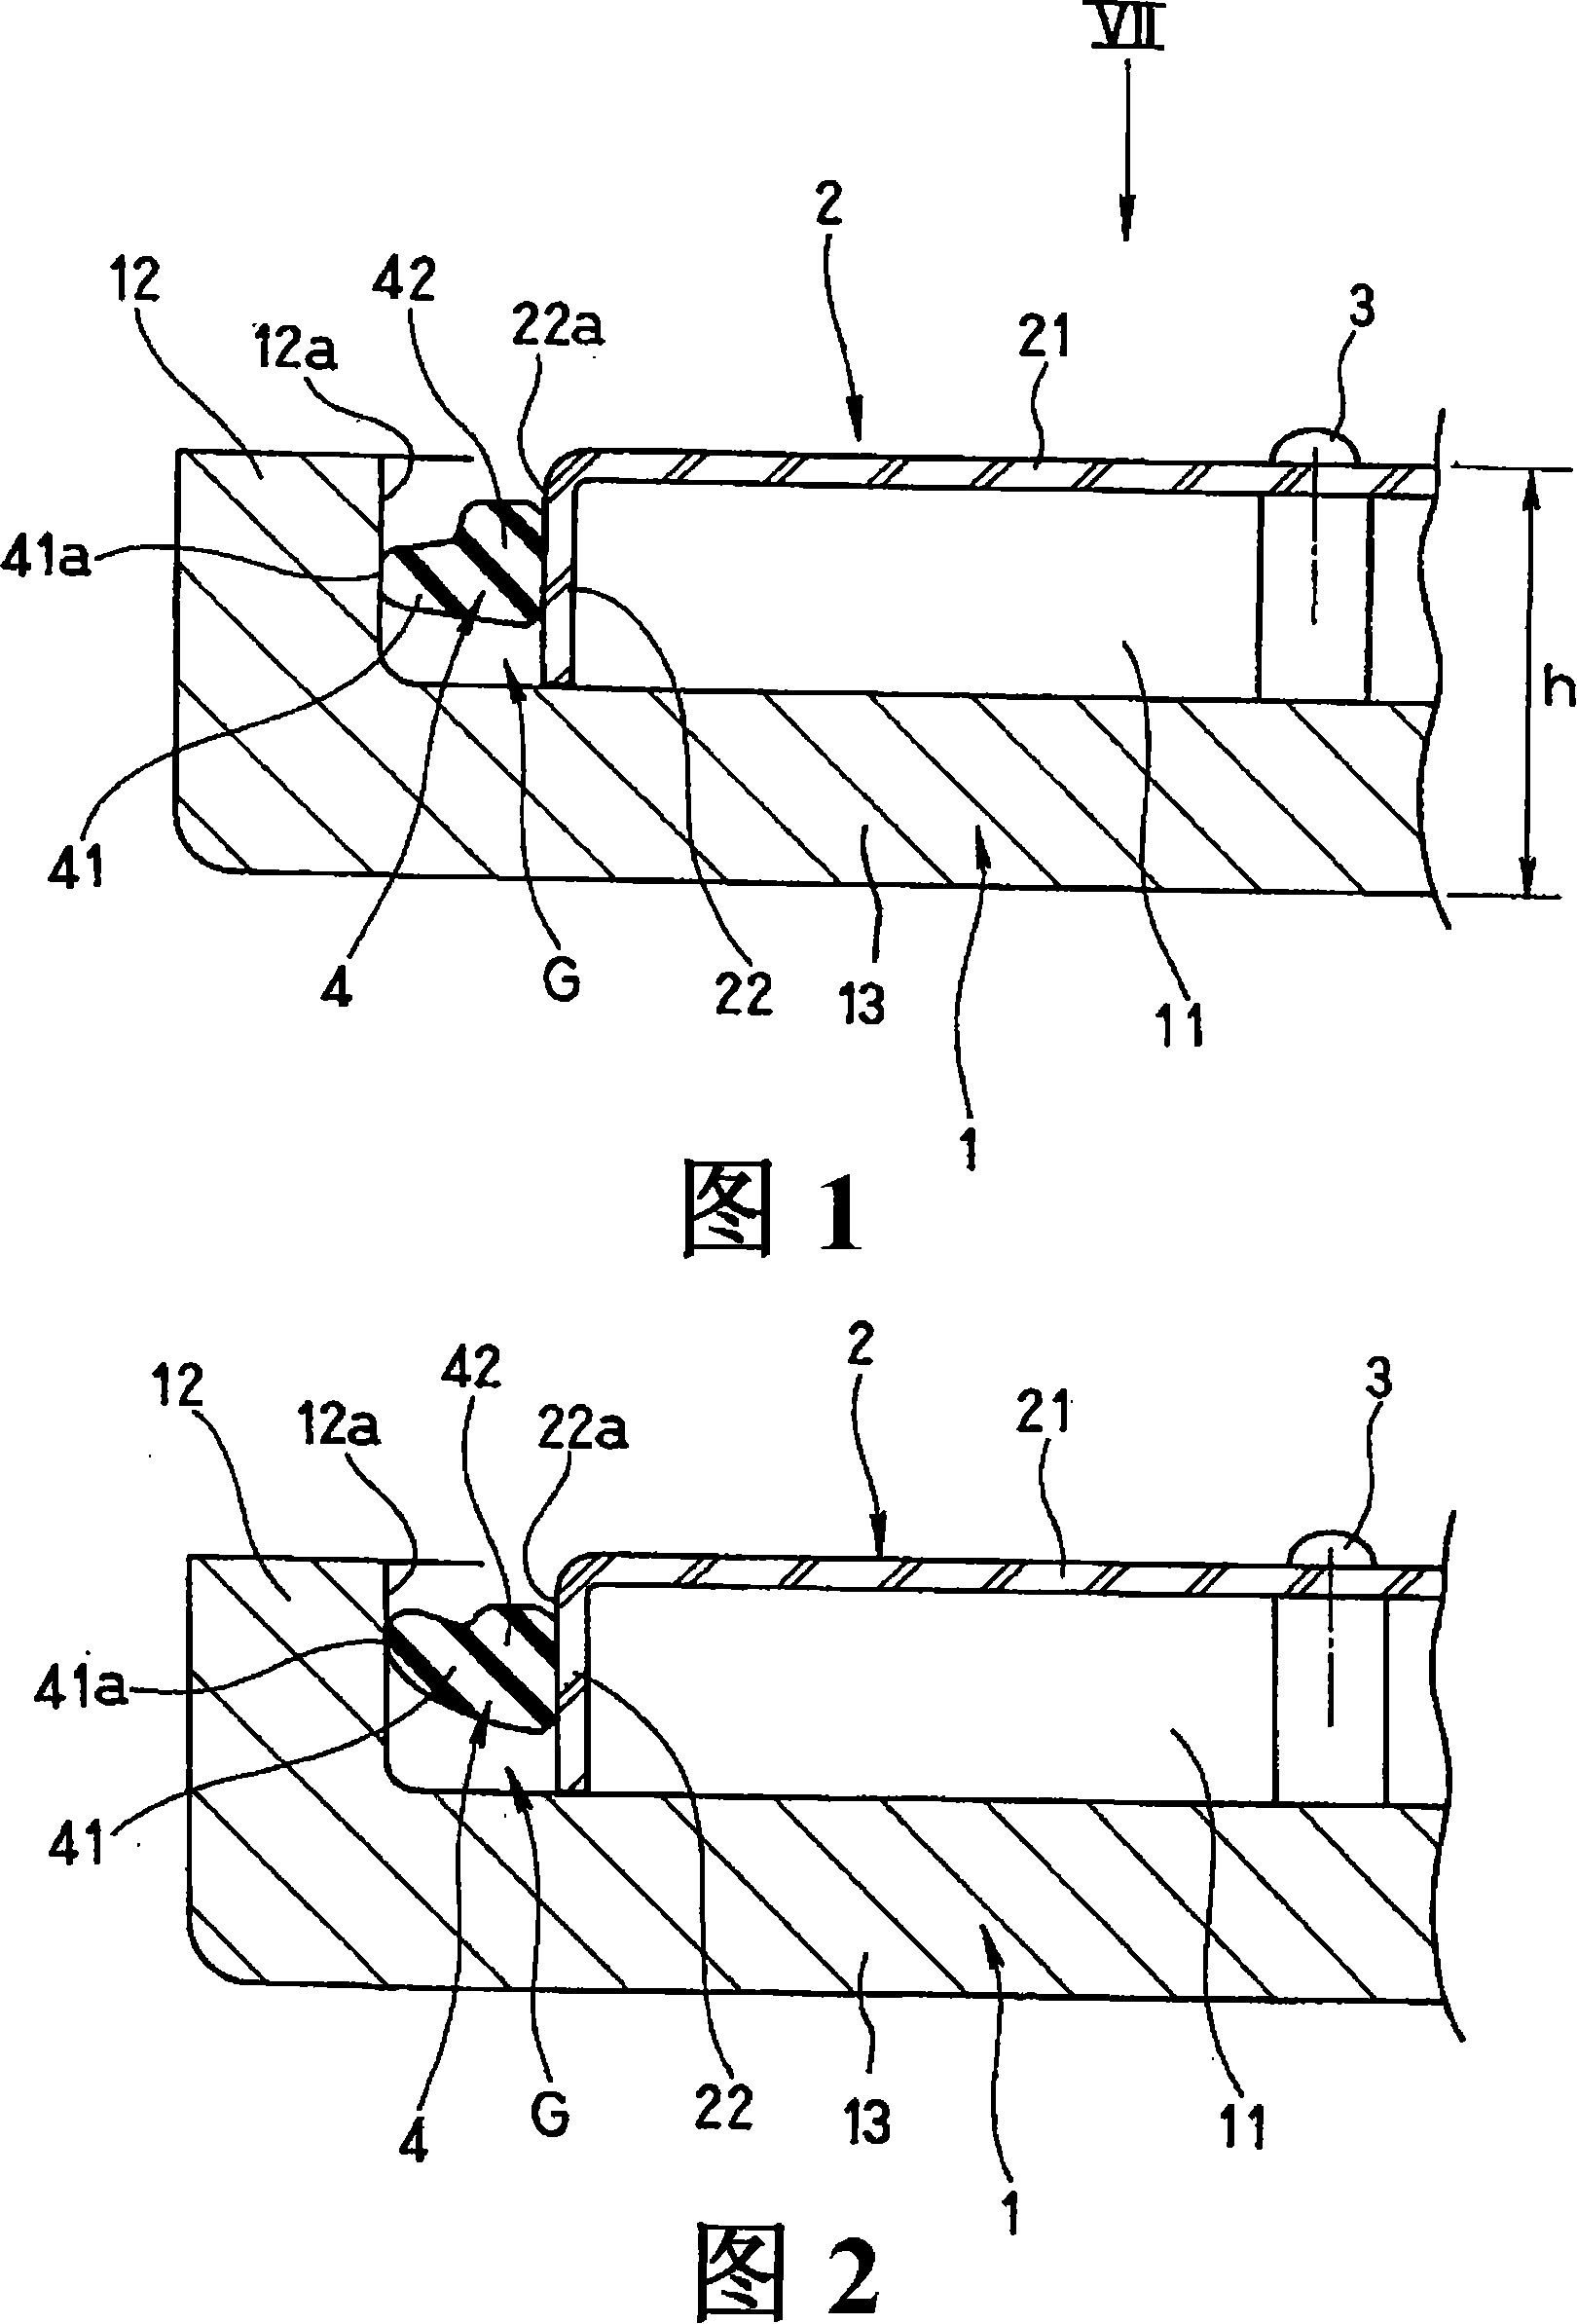 Sealing structure using gasket